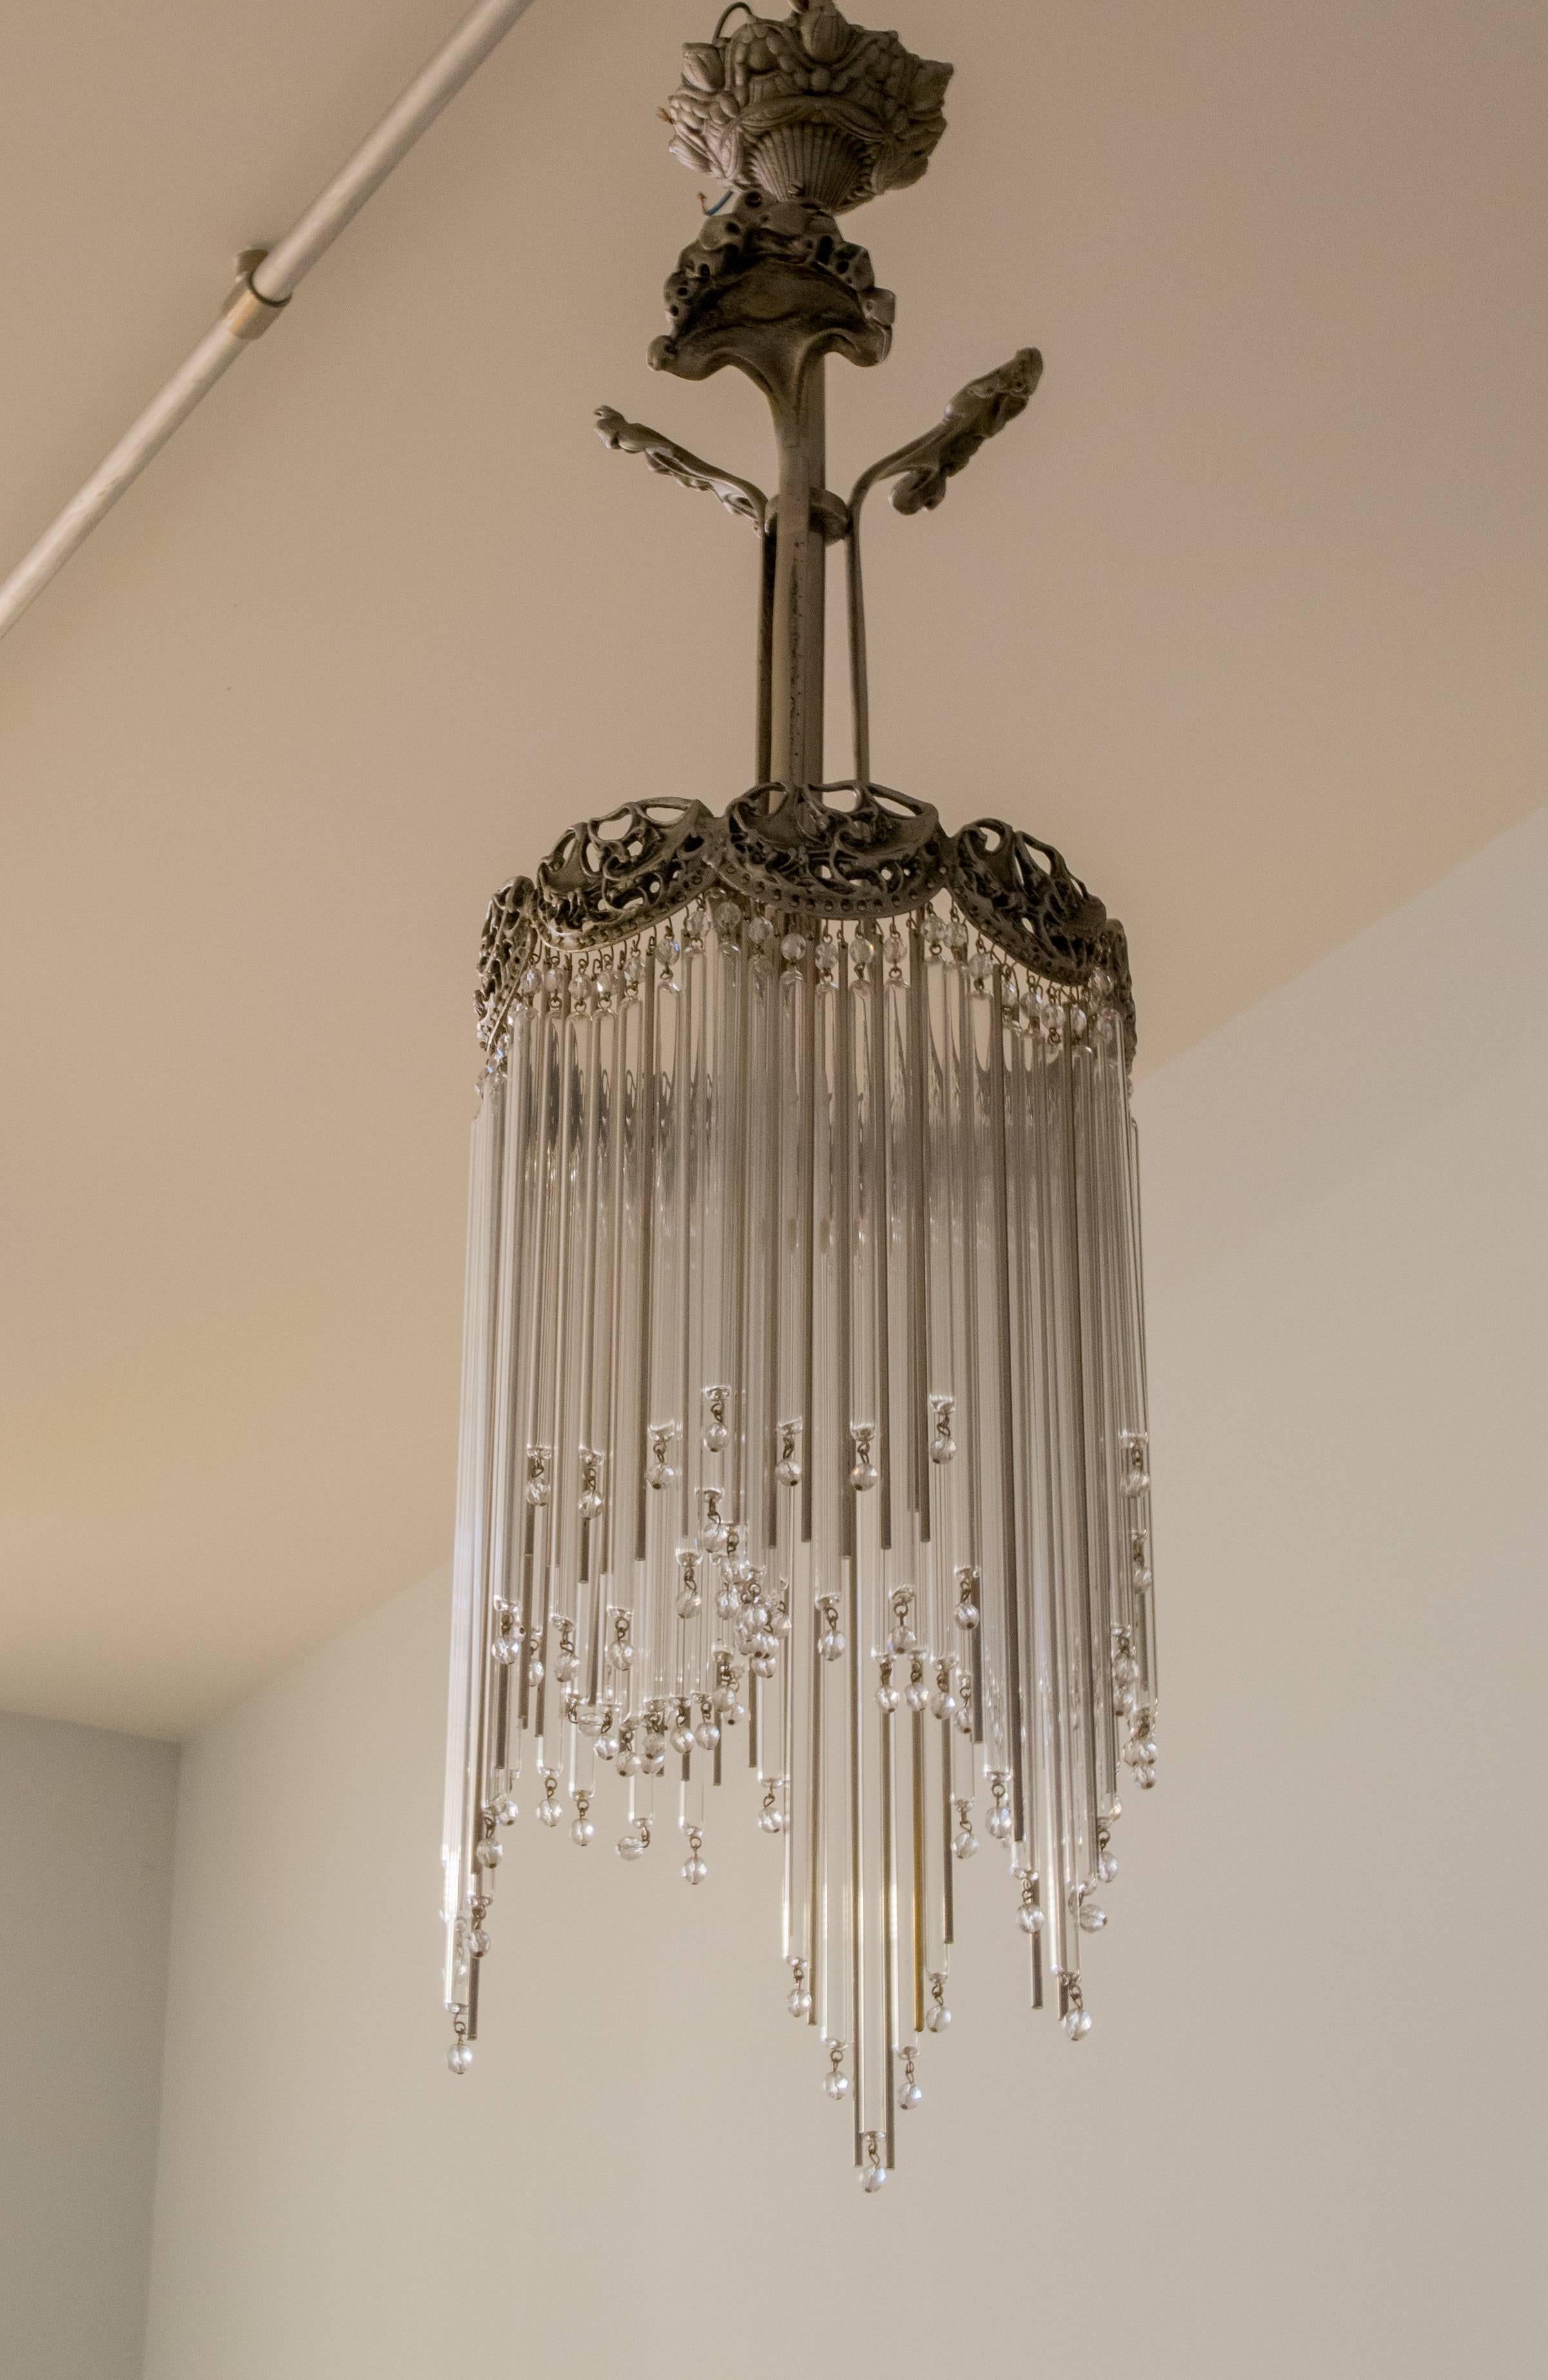 Art Nouveau Guimard chandelier with nickel finish.